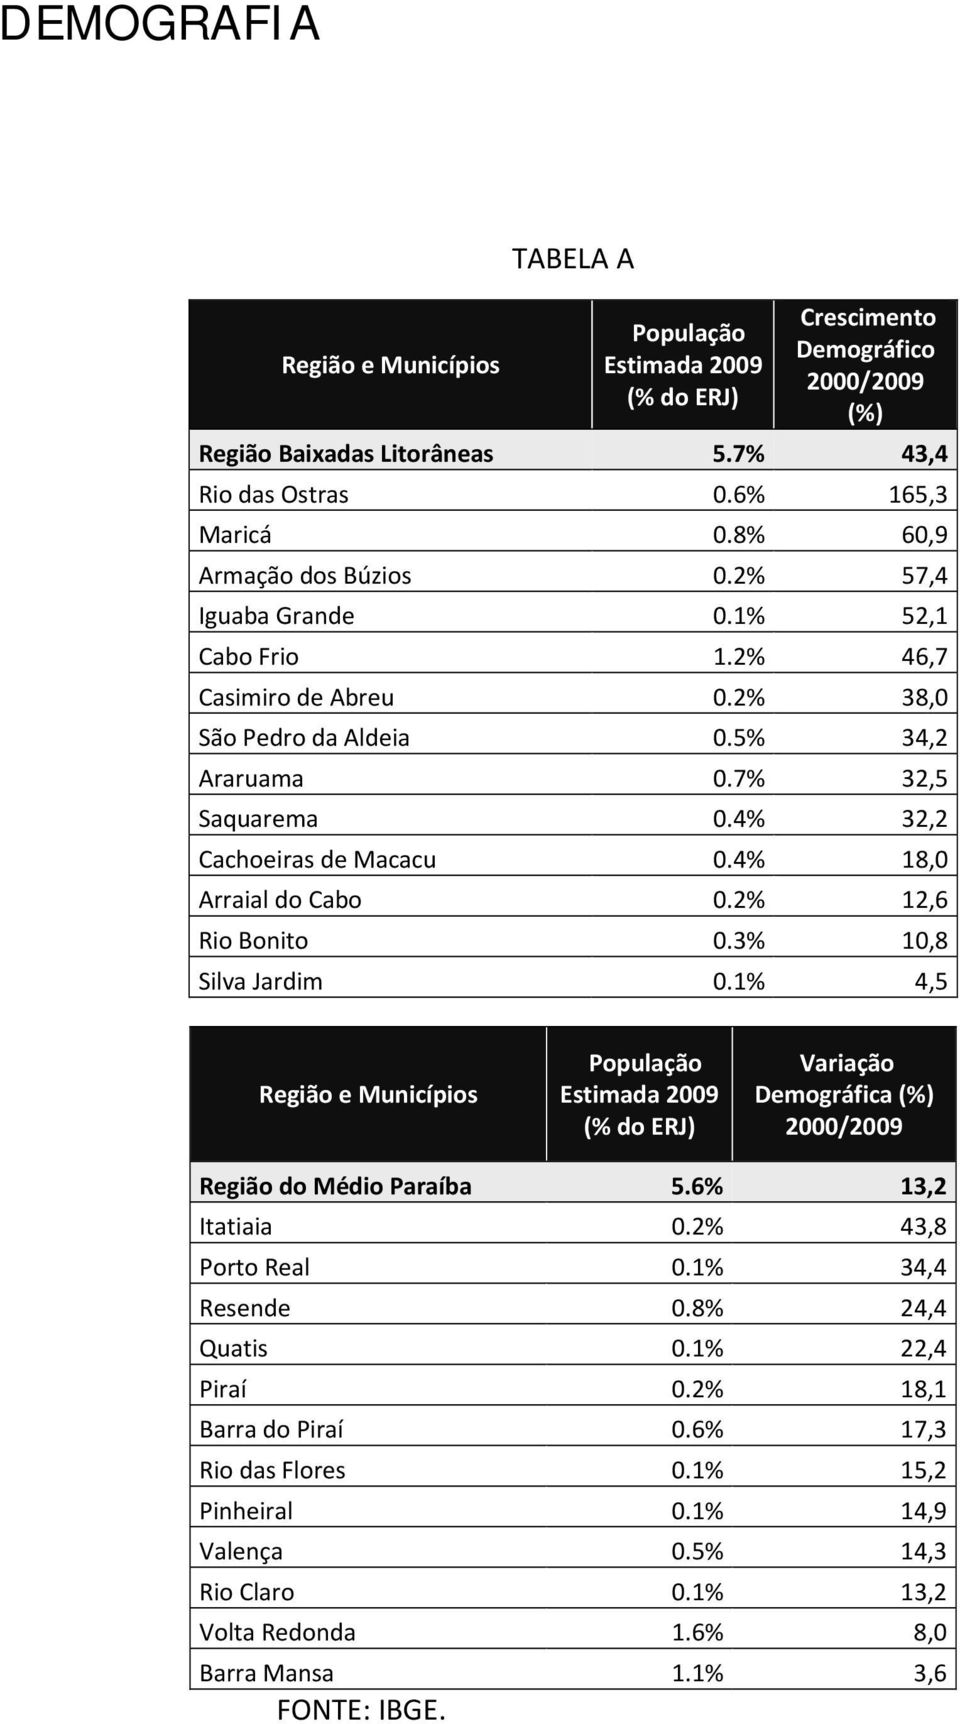 4% 32,2 Cachoeiras de Macacu 0.4% 18,0 Arraial do Cabo 0.2% 12,6 Rio Bonito 0.3% 10,8 Silva Jardim 0.